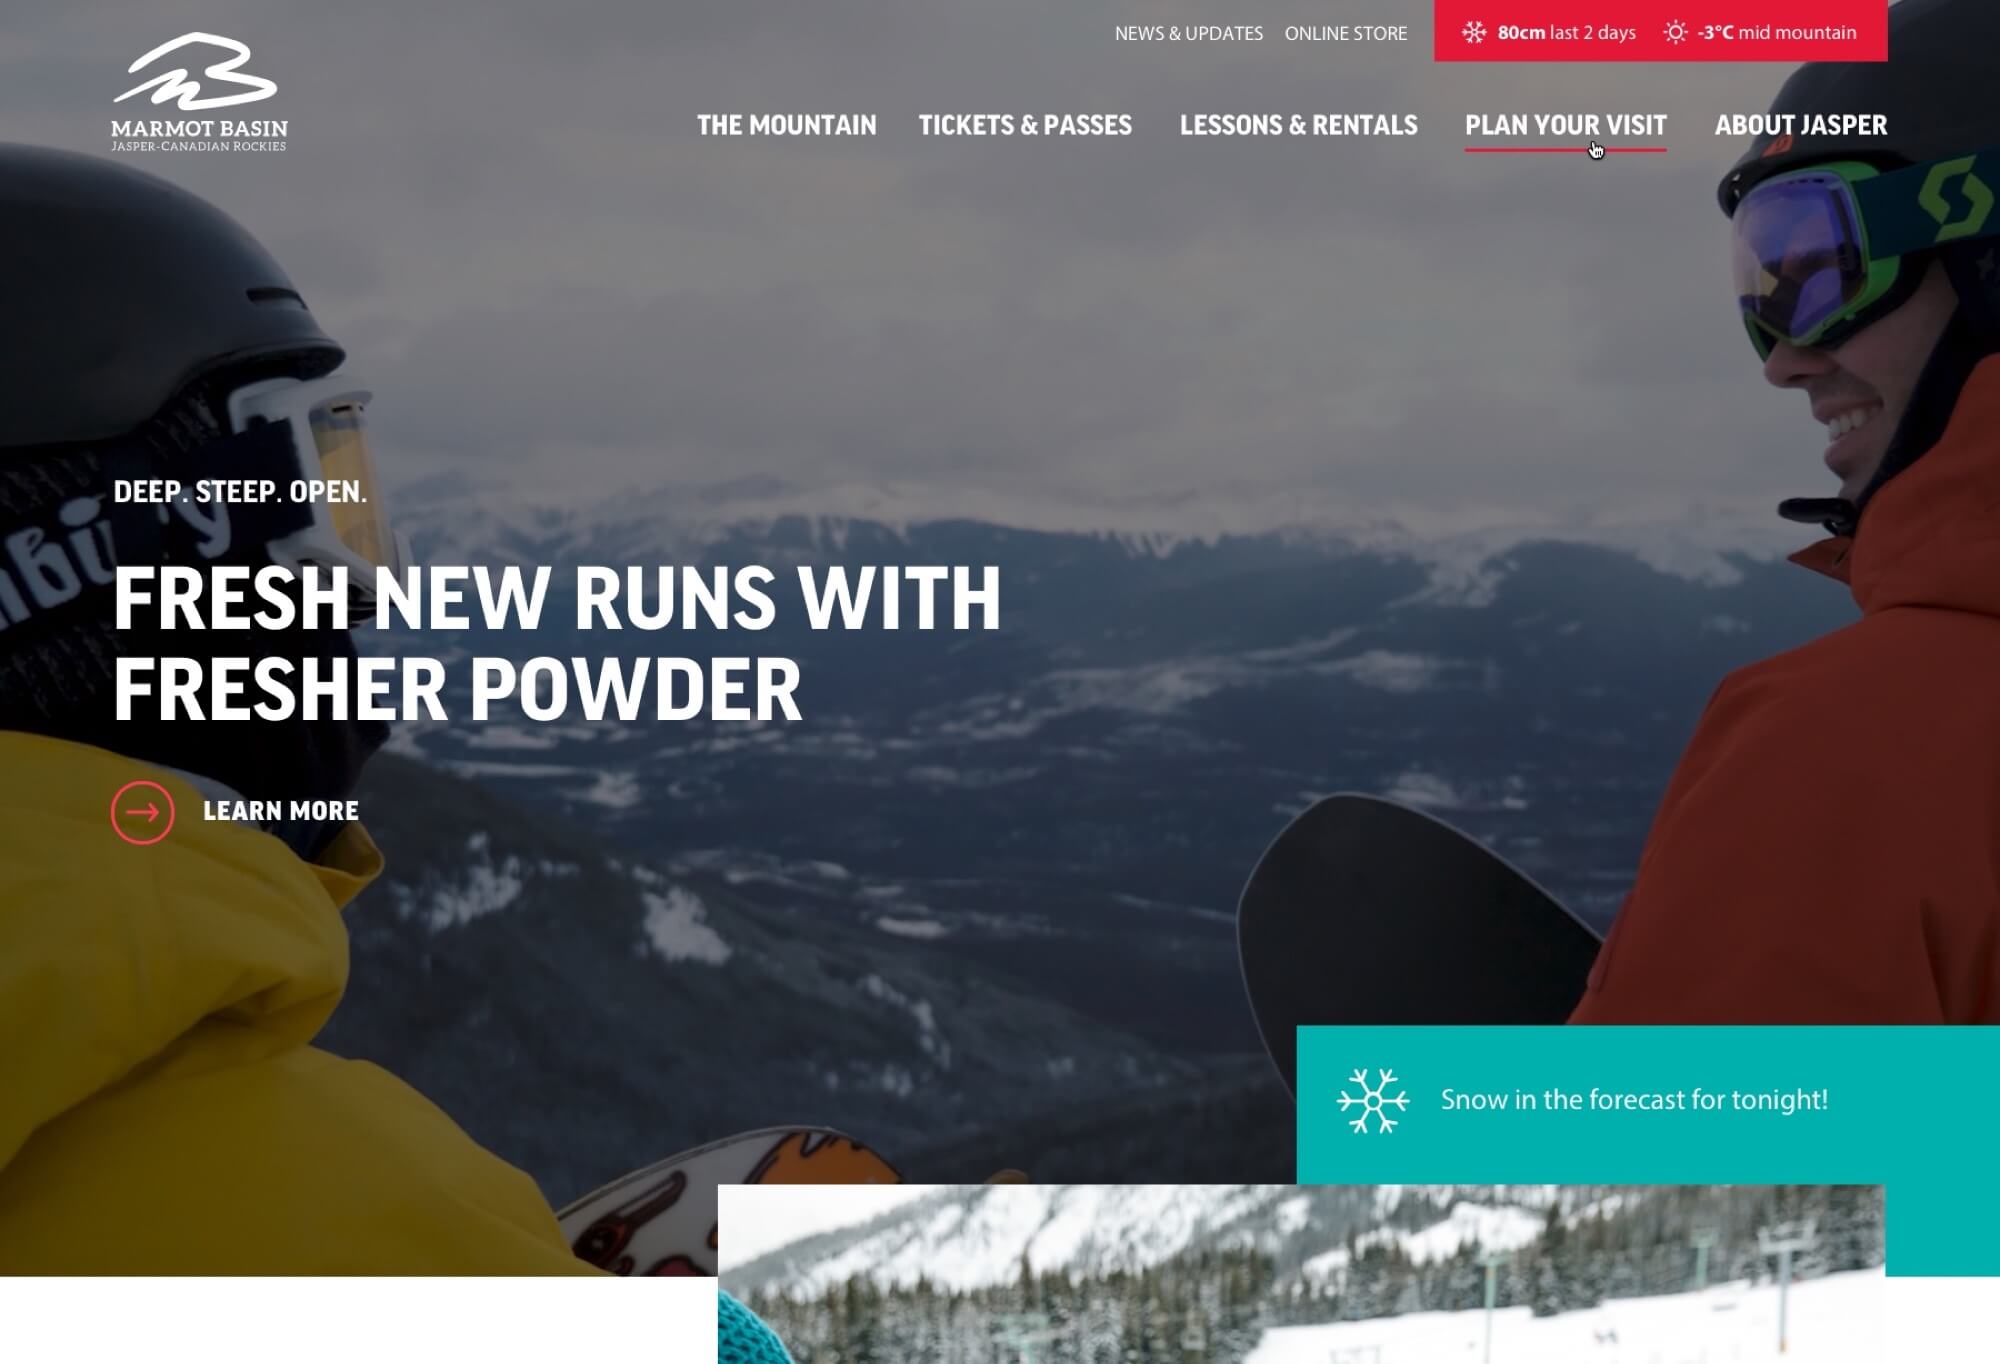 Homepage screenshot of the Marmot Basin website